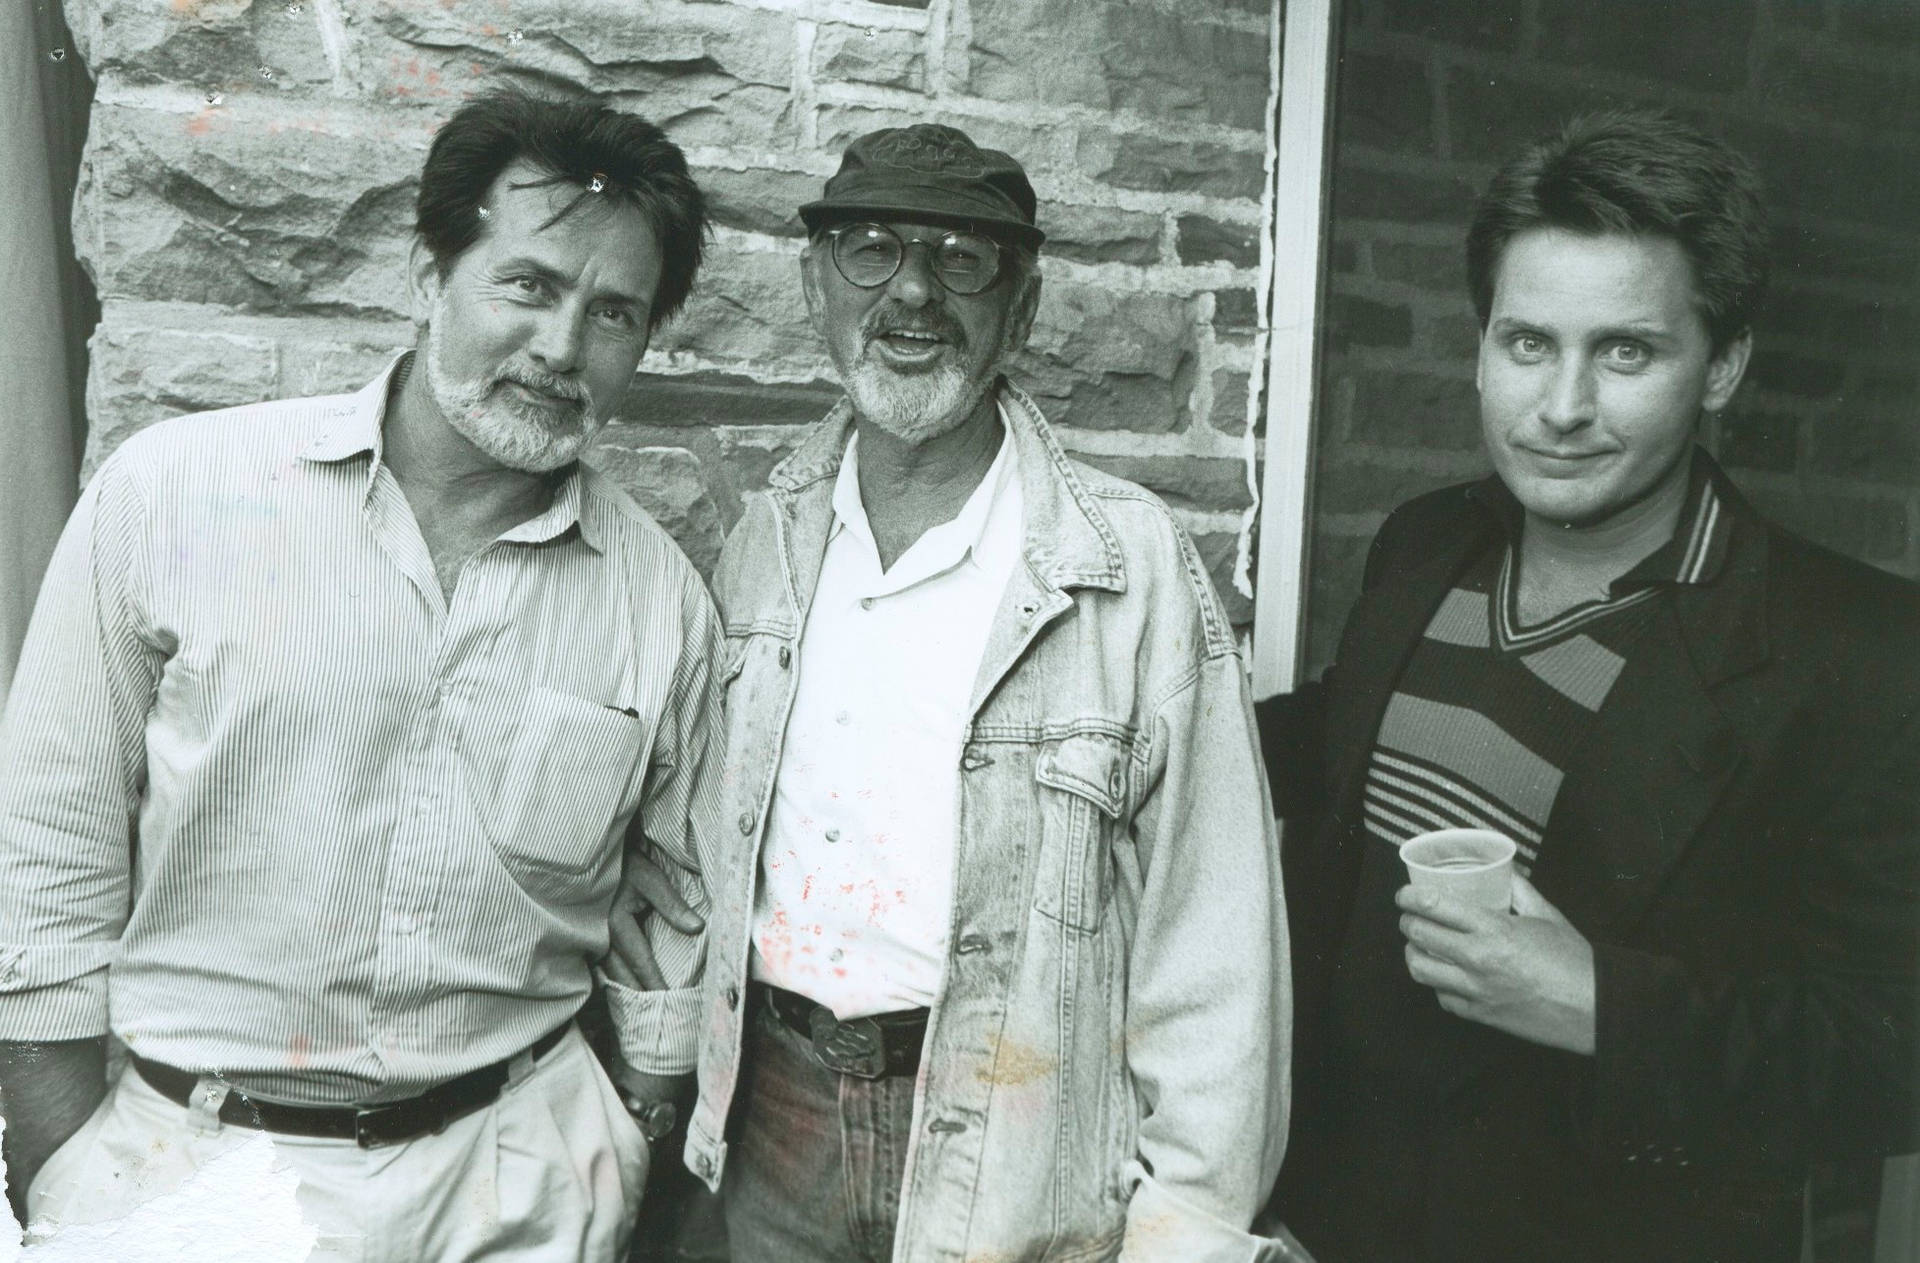 Veteran Actor Martin Sheen posing with Norman Jewison and Emilio Estevez. Wallpaper